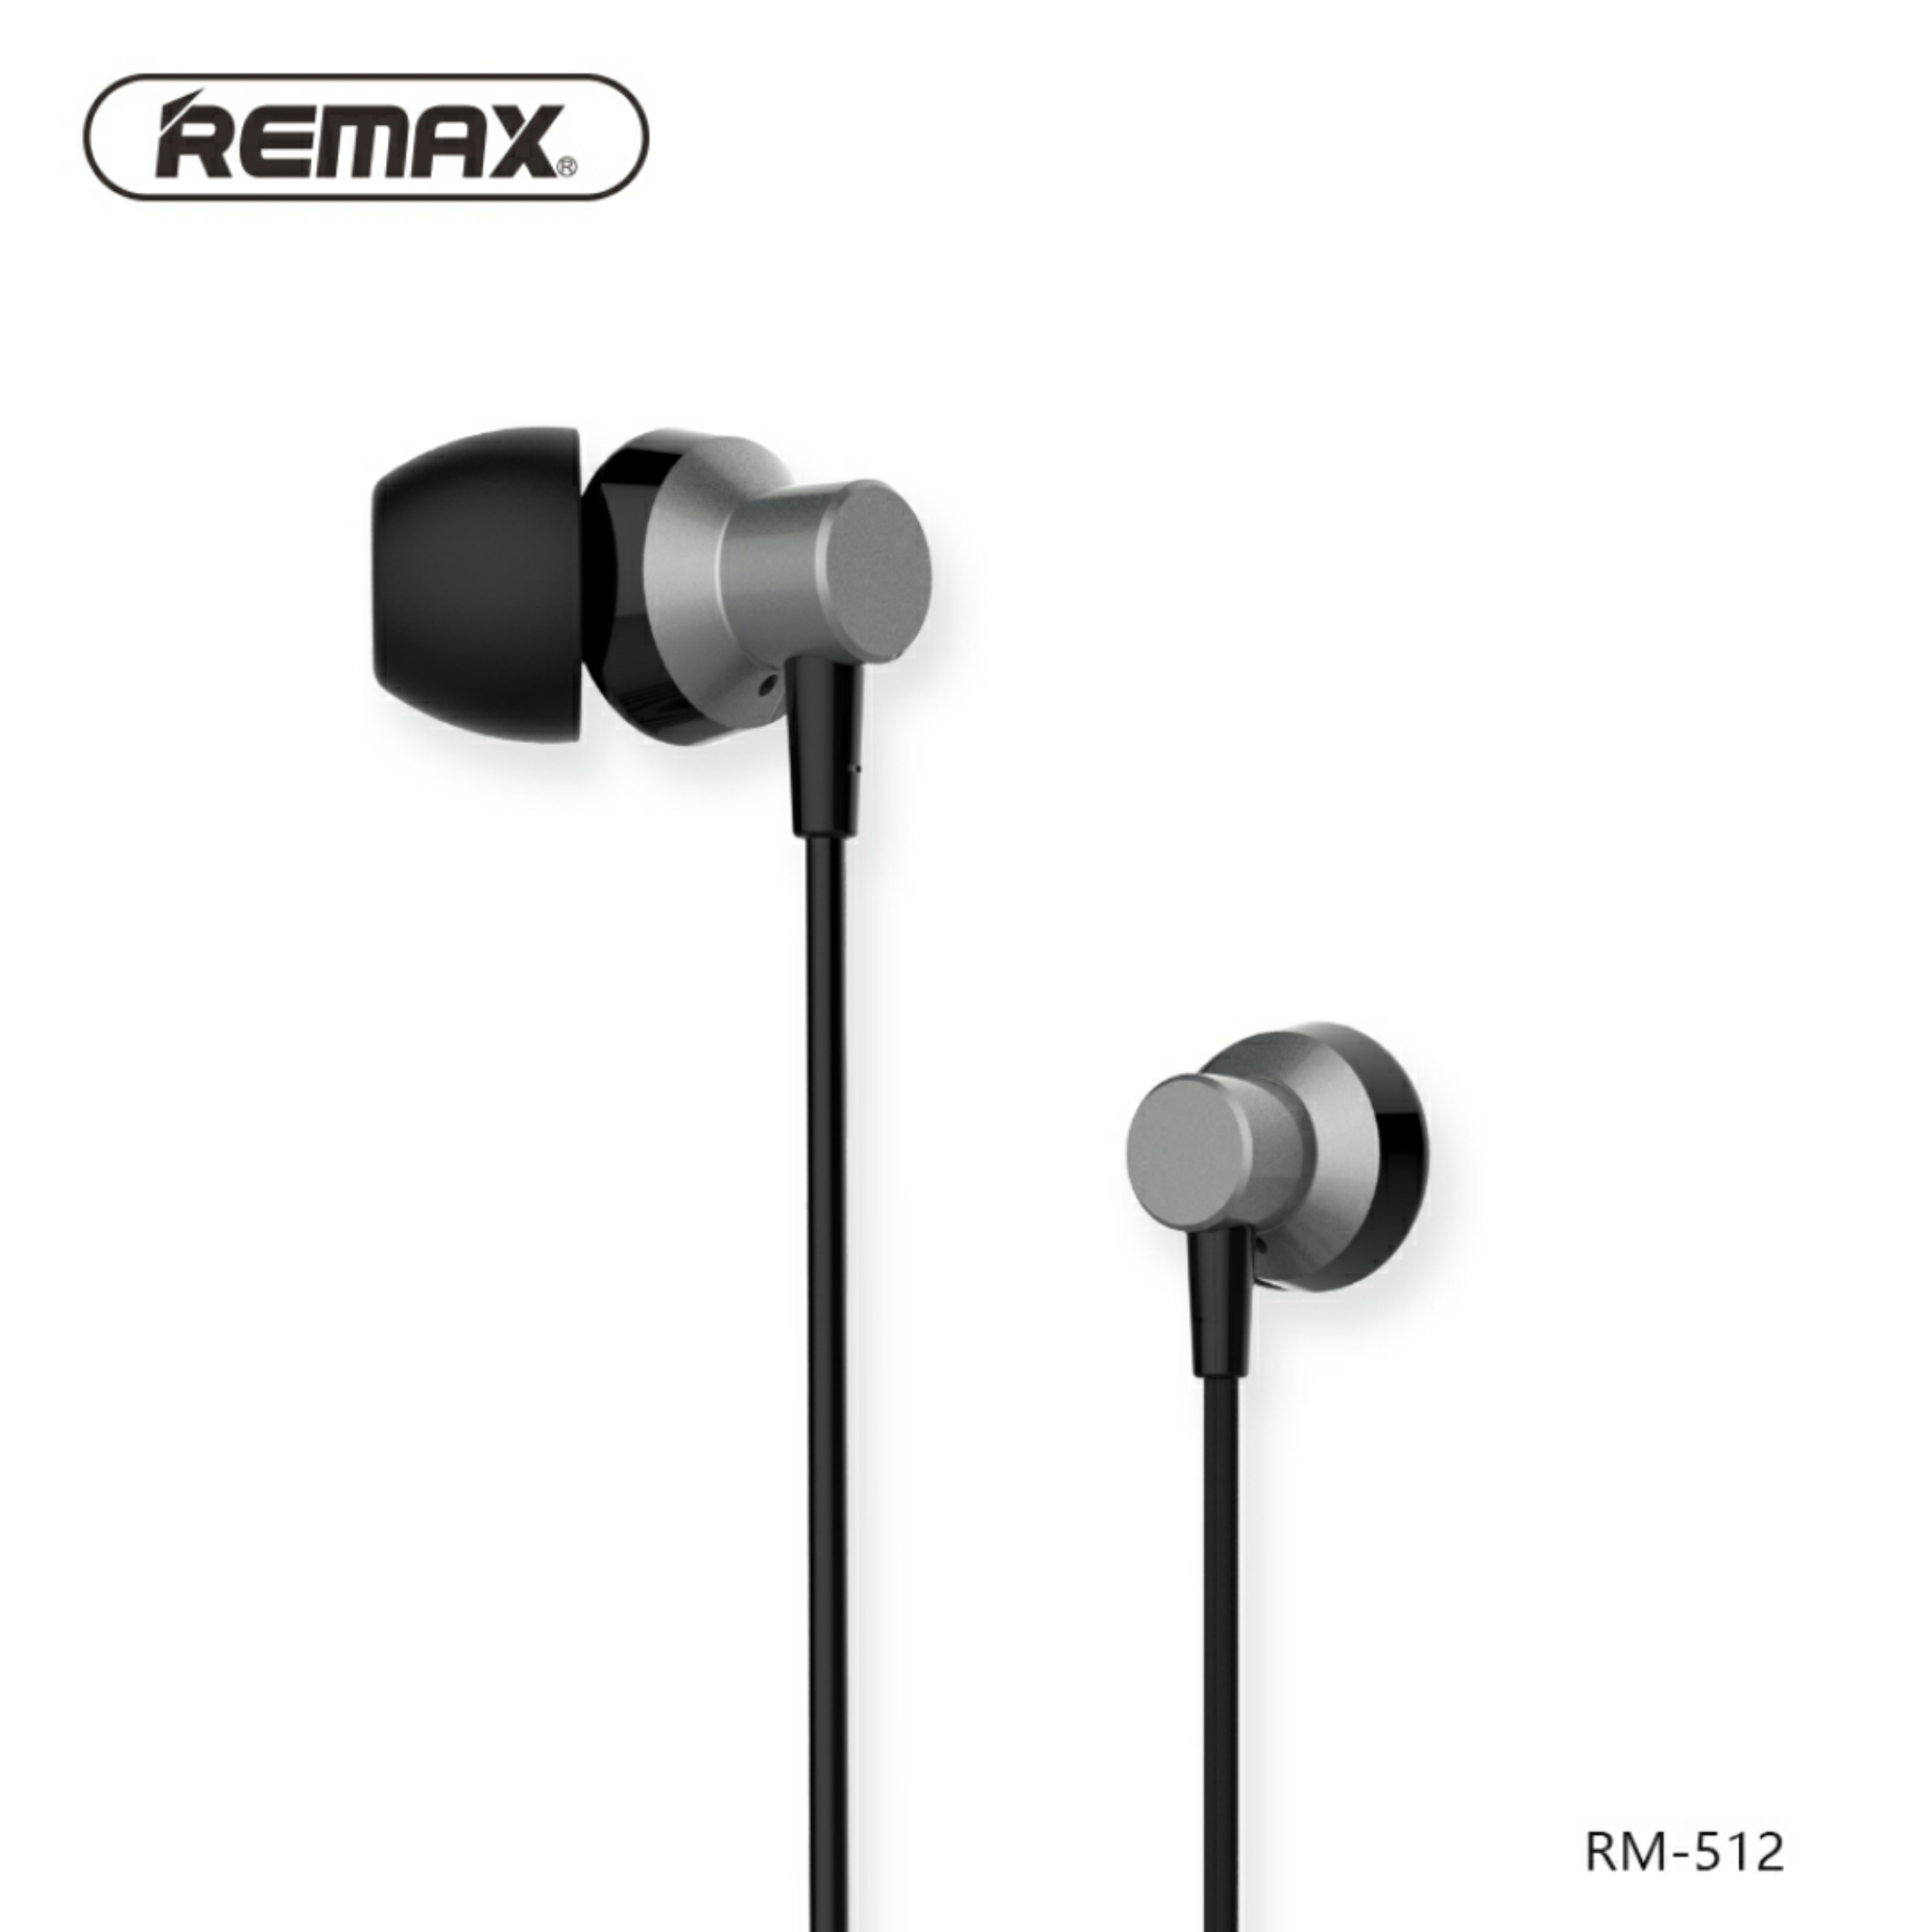 REMAX RM 512 EARPHONE